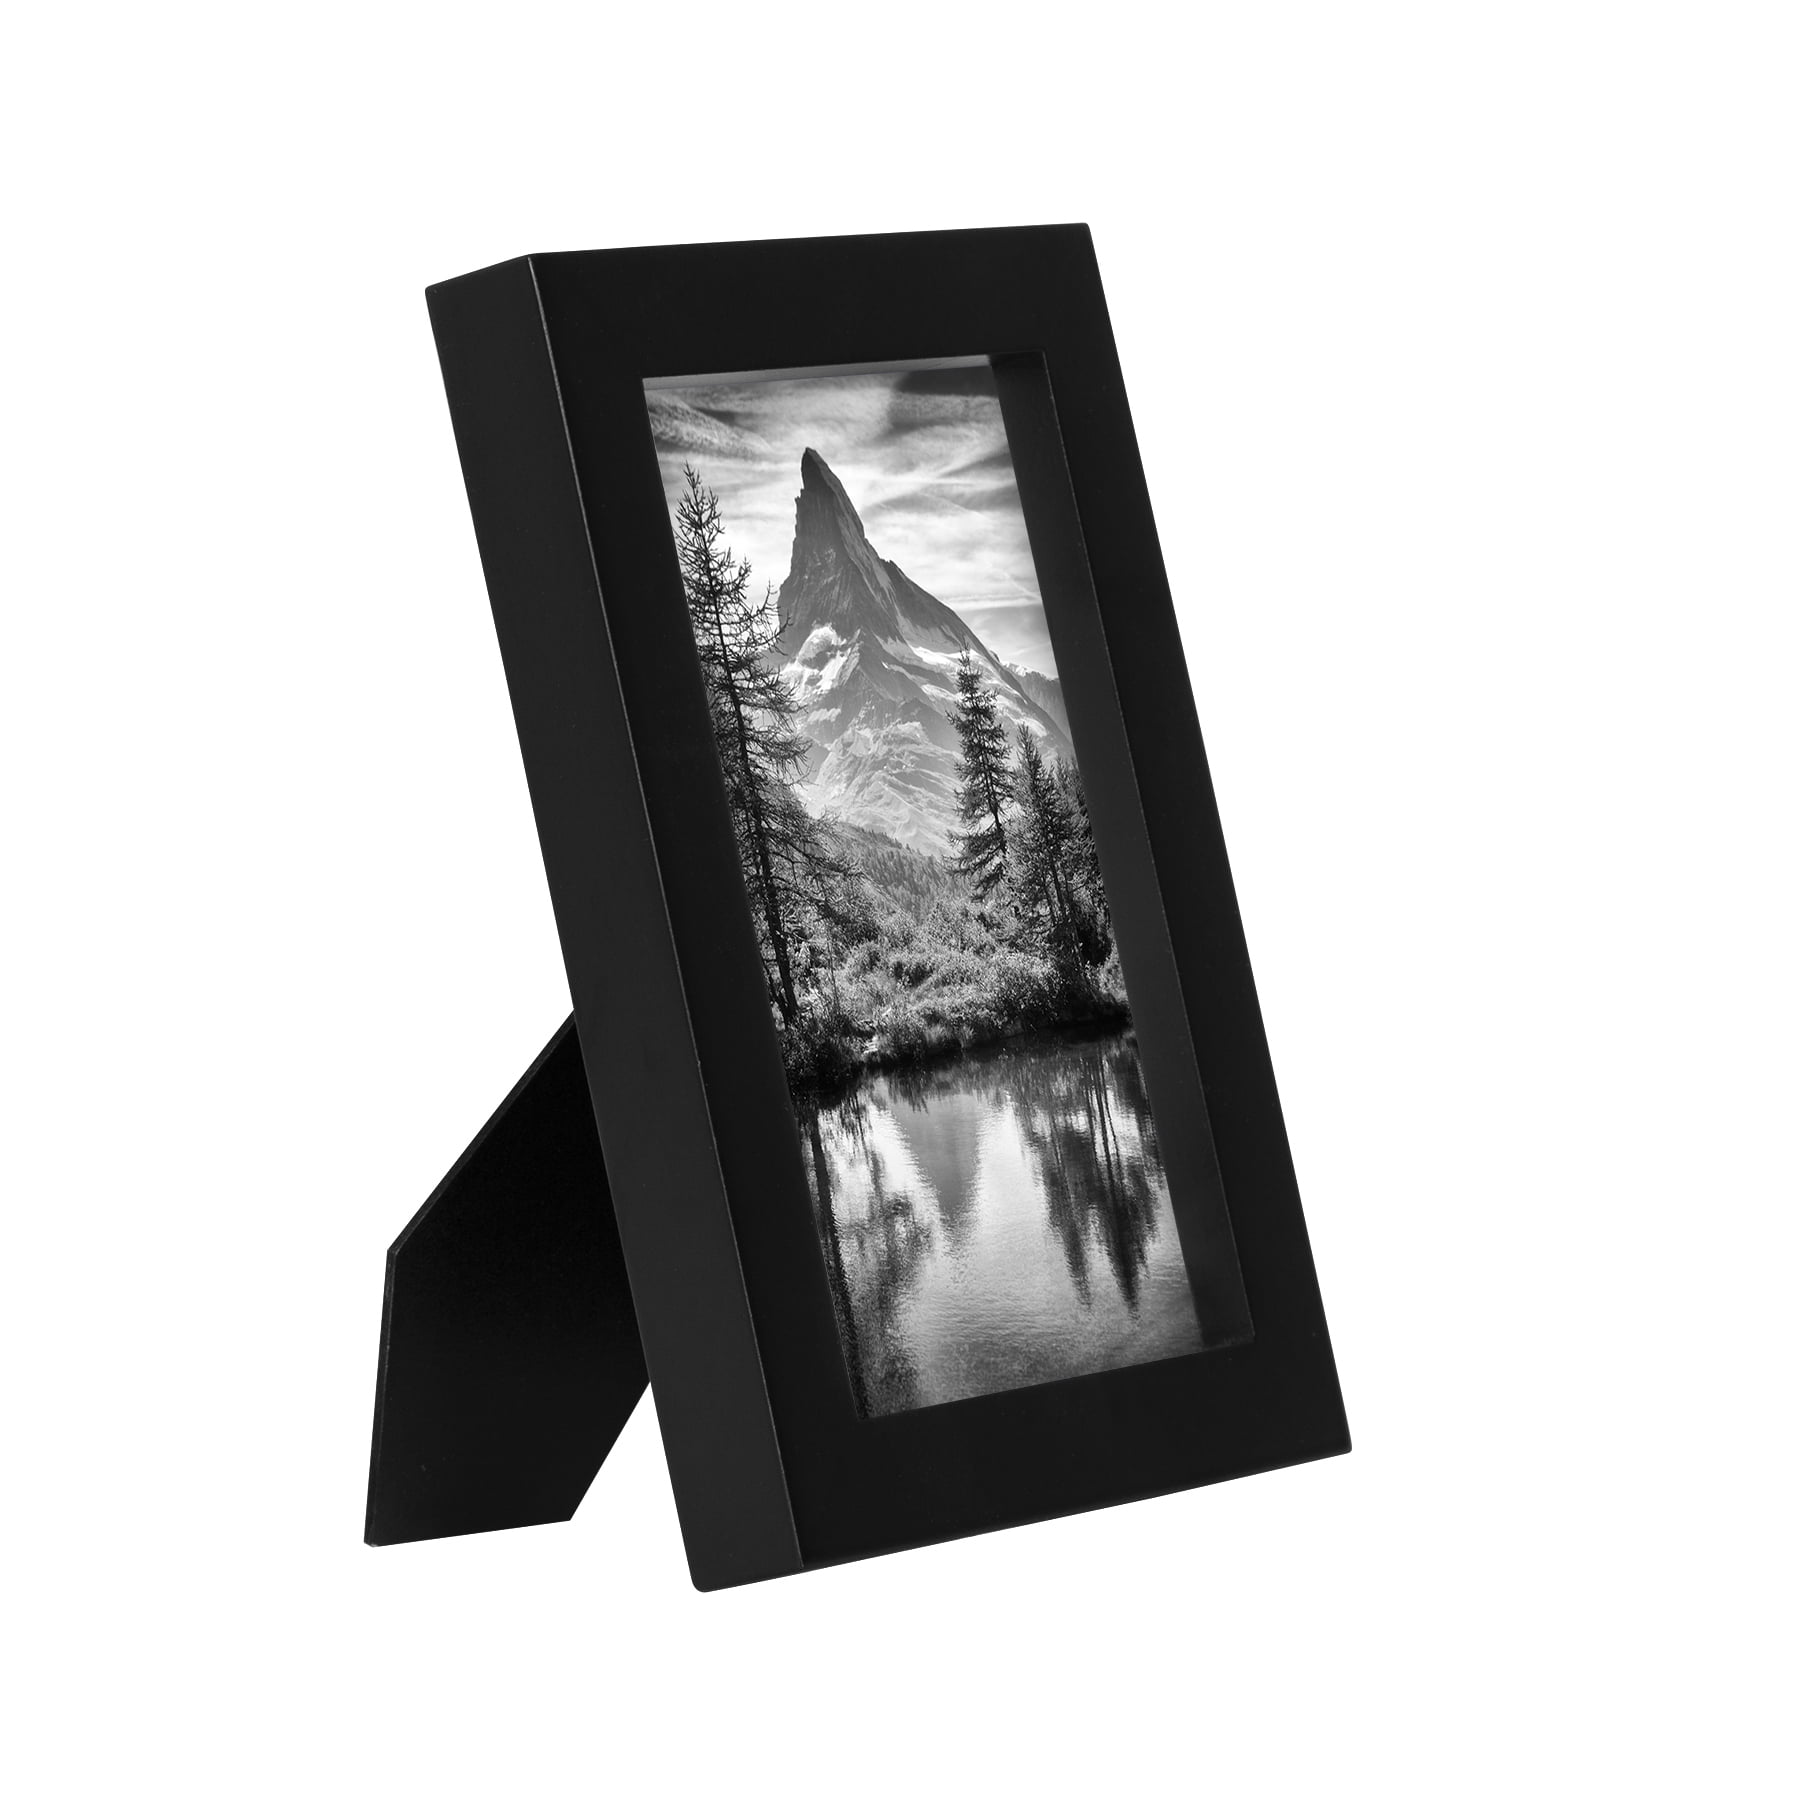 HappyHapi 4x6 Picture Frame,Set of Black Picture Frames, Tabletop